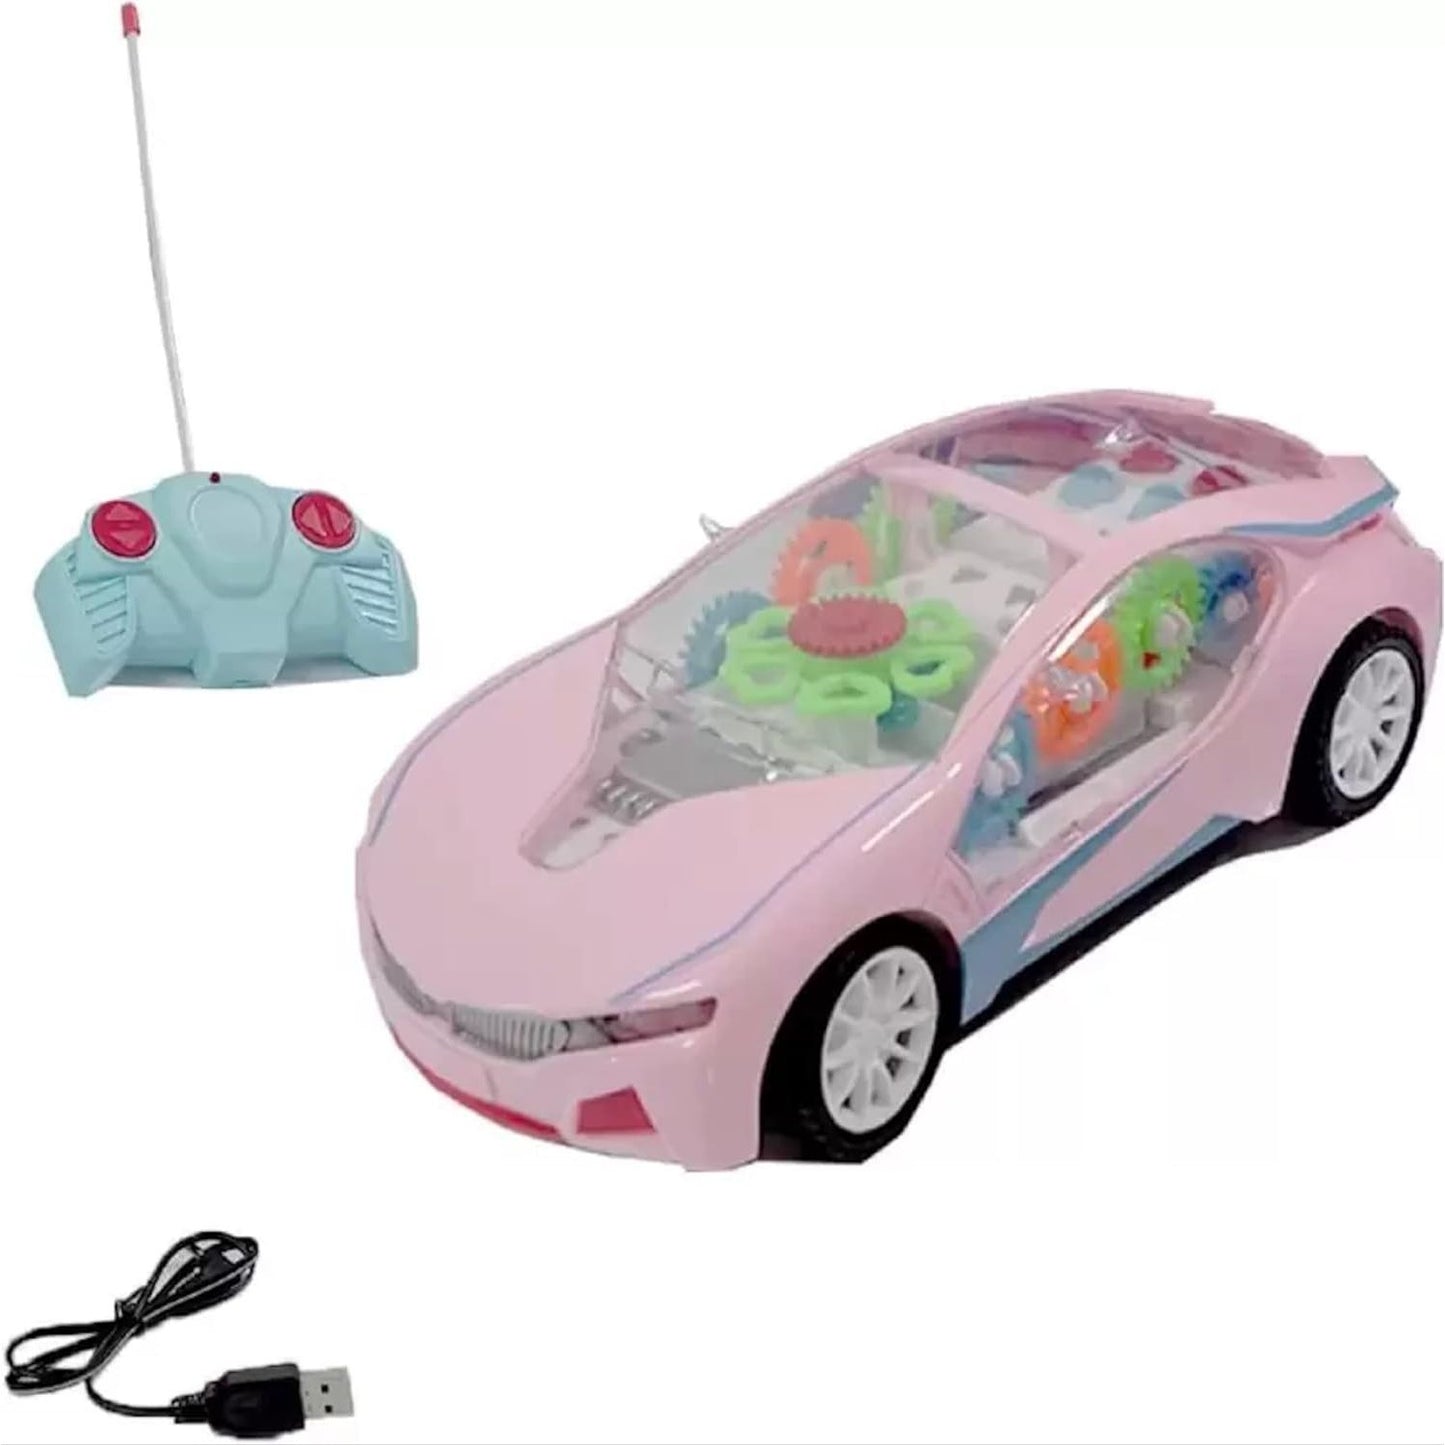 Gear Sports RC Car | Remote Control Car With Lights